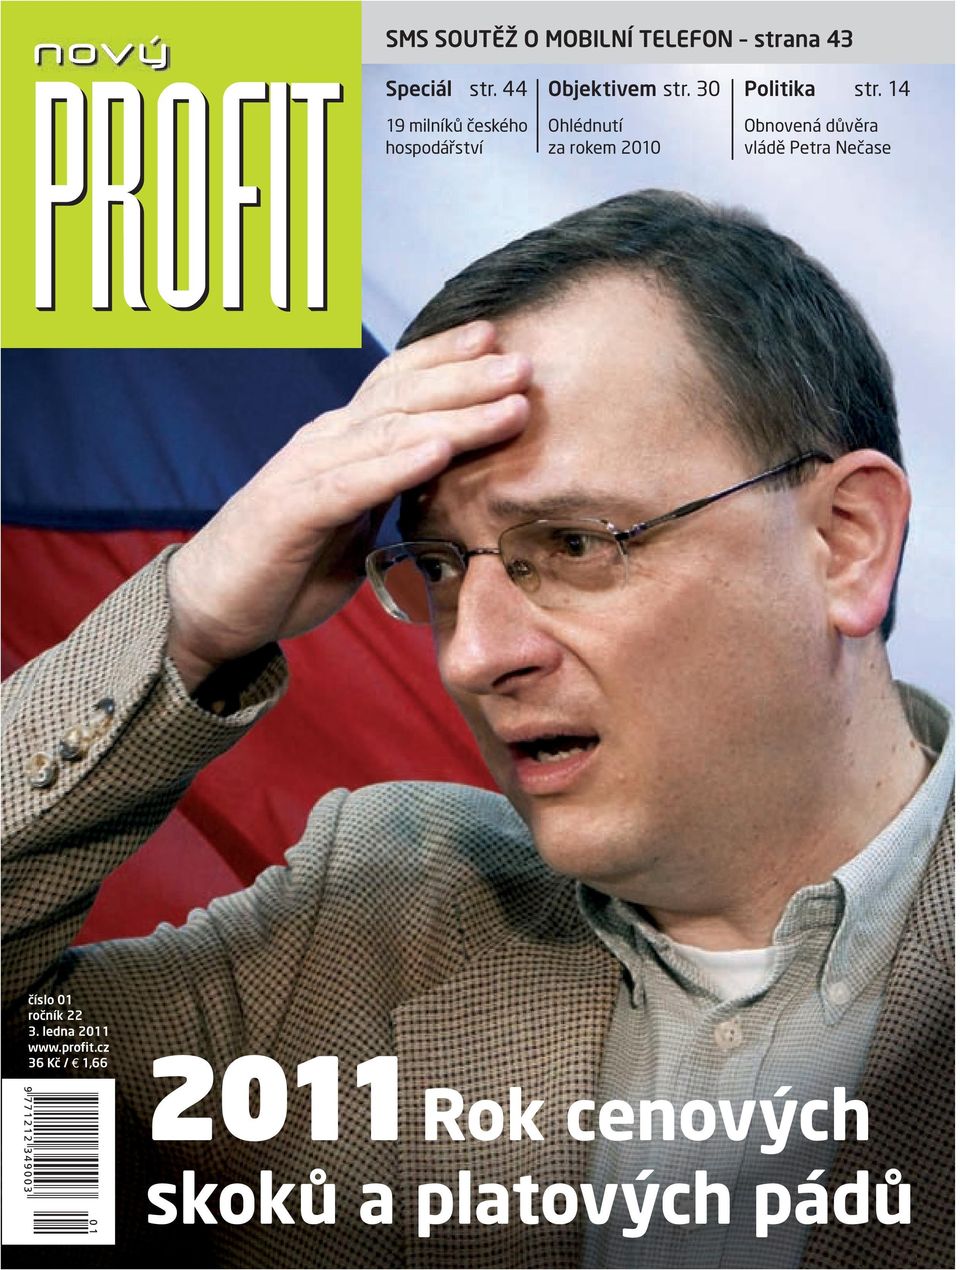 30 Ohlédnutí za rokem 2010 Politika str.